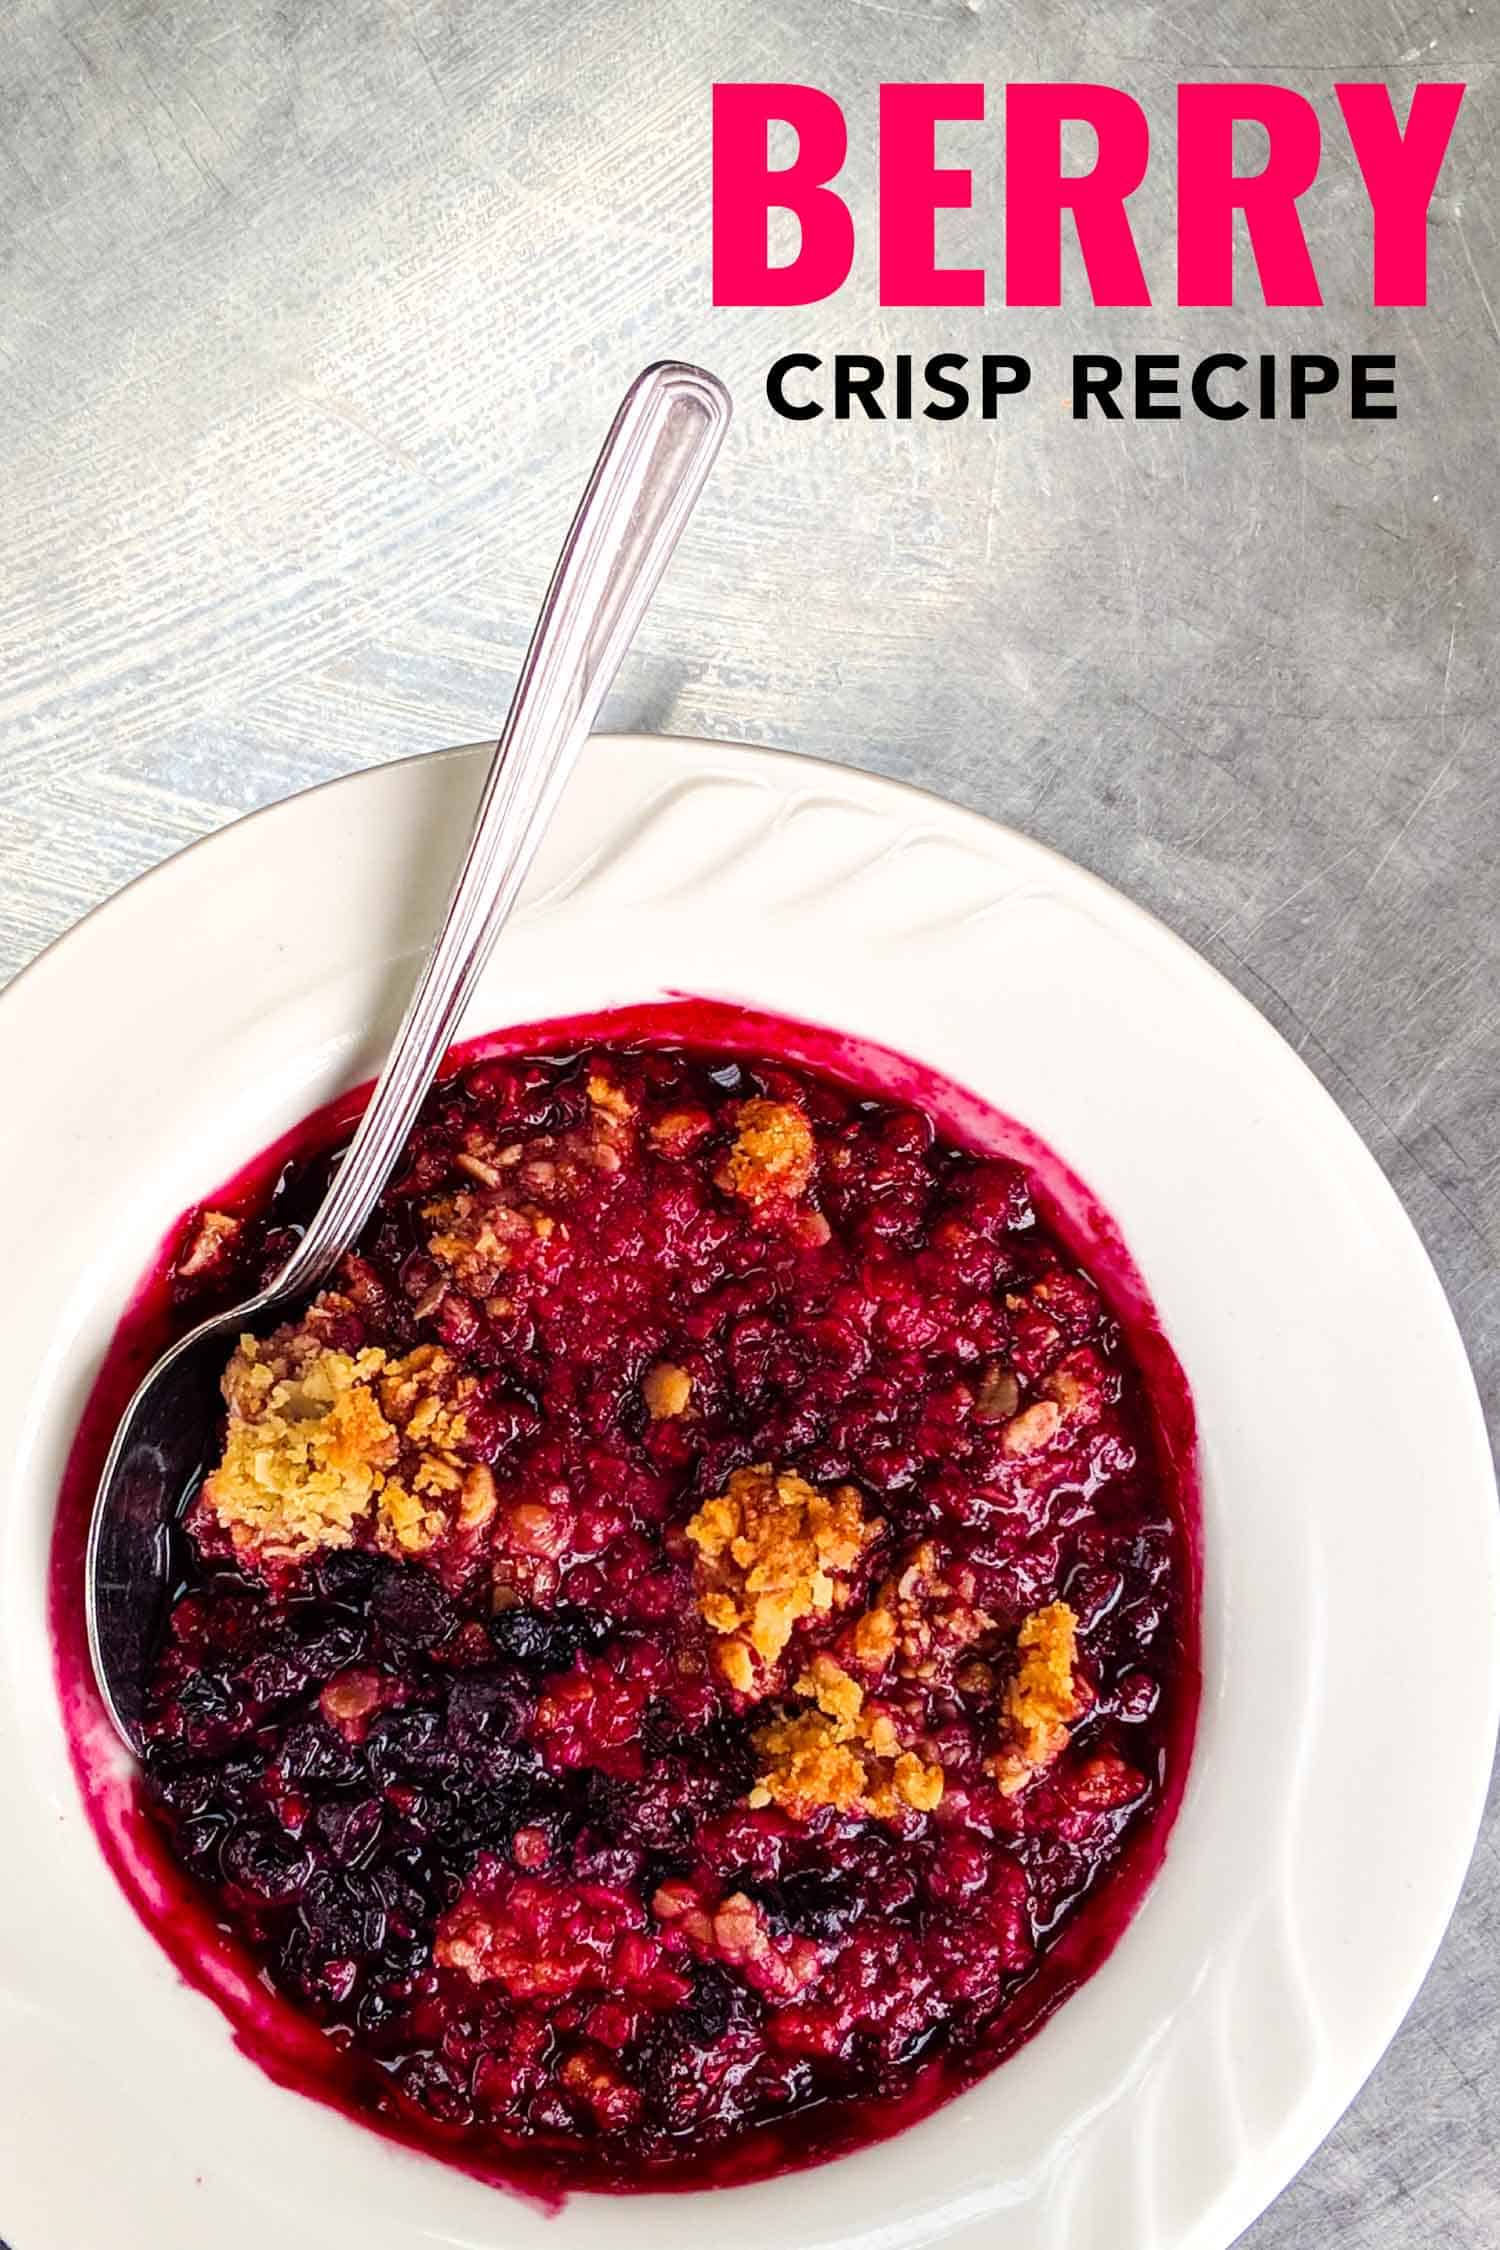 Mixed berry crisp recipe in white bowl on silver background, a classic Nova Scotian dessert.